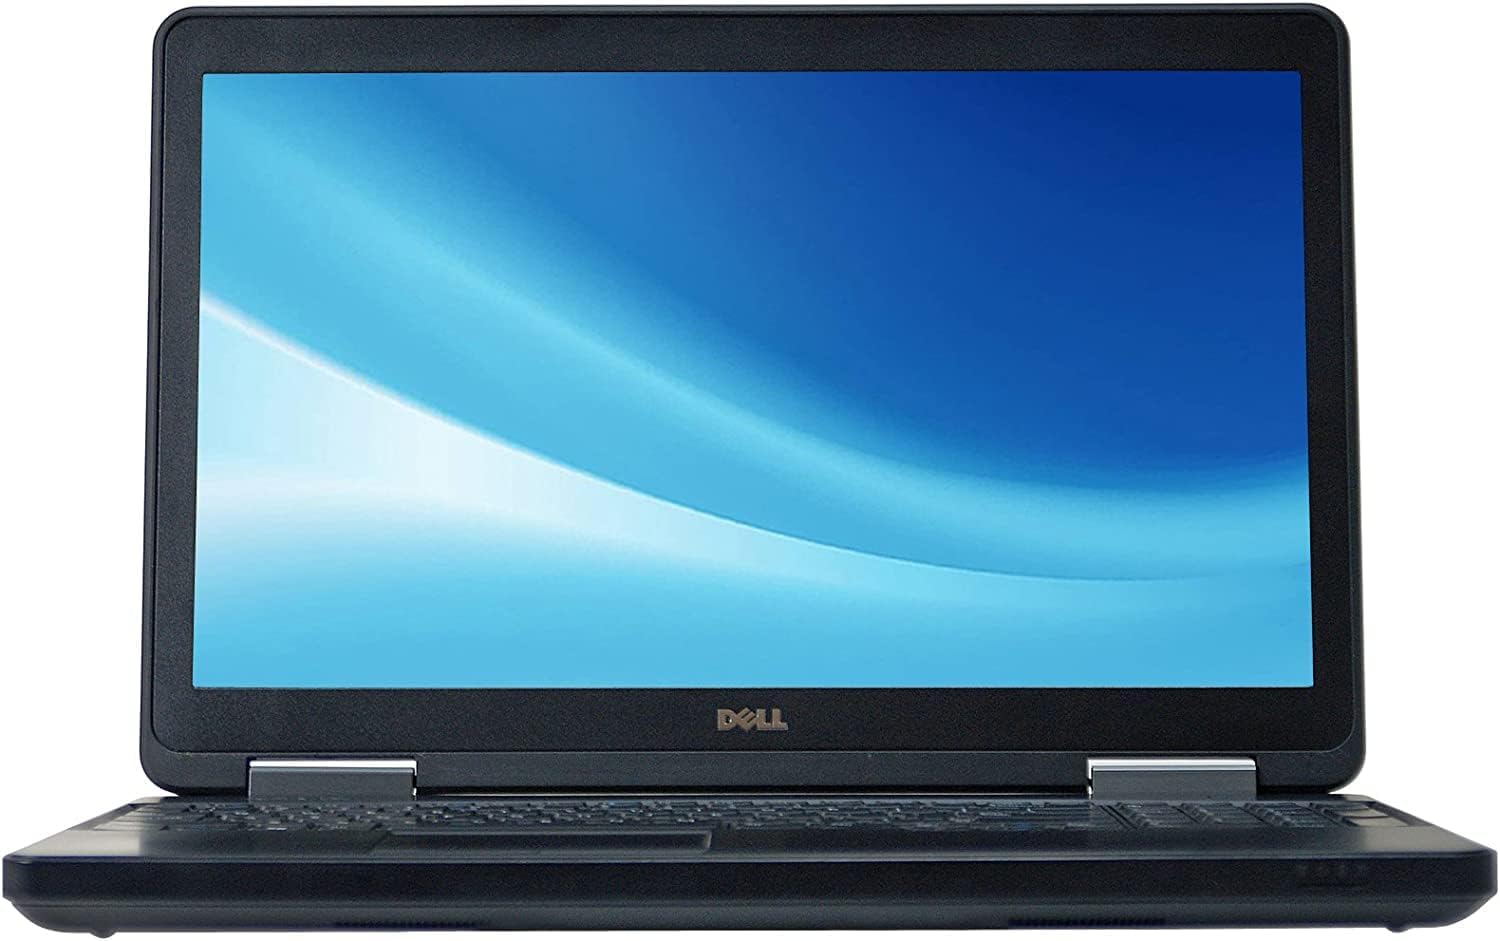 Refurbished Dell Latitude E5540 Laptop Computer, Intel Core i5, 16GB Ram, 500GB Hard Drive, Windows 11 Operating System